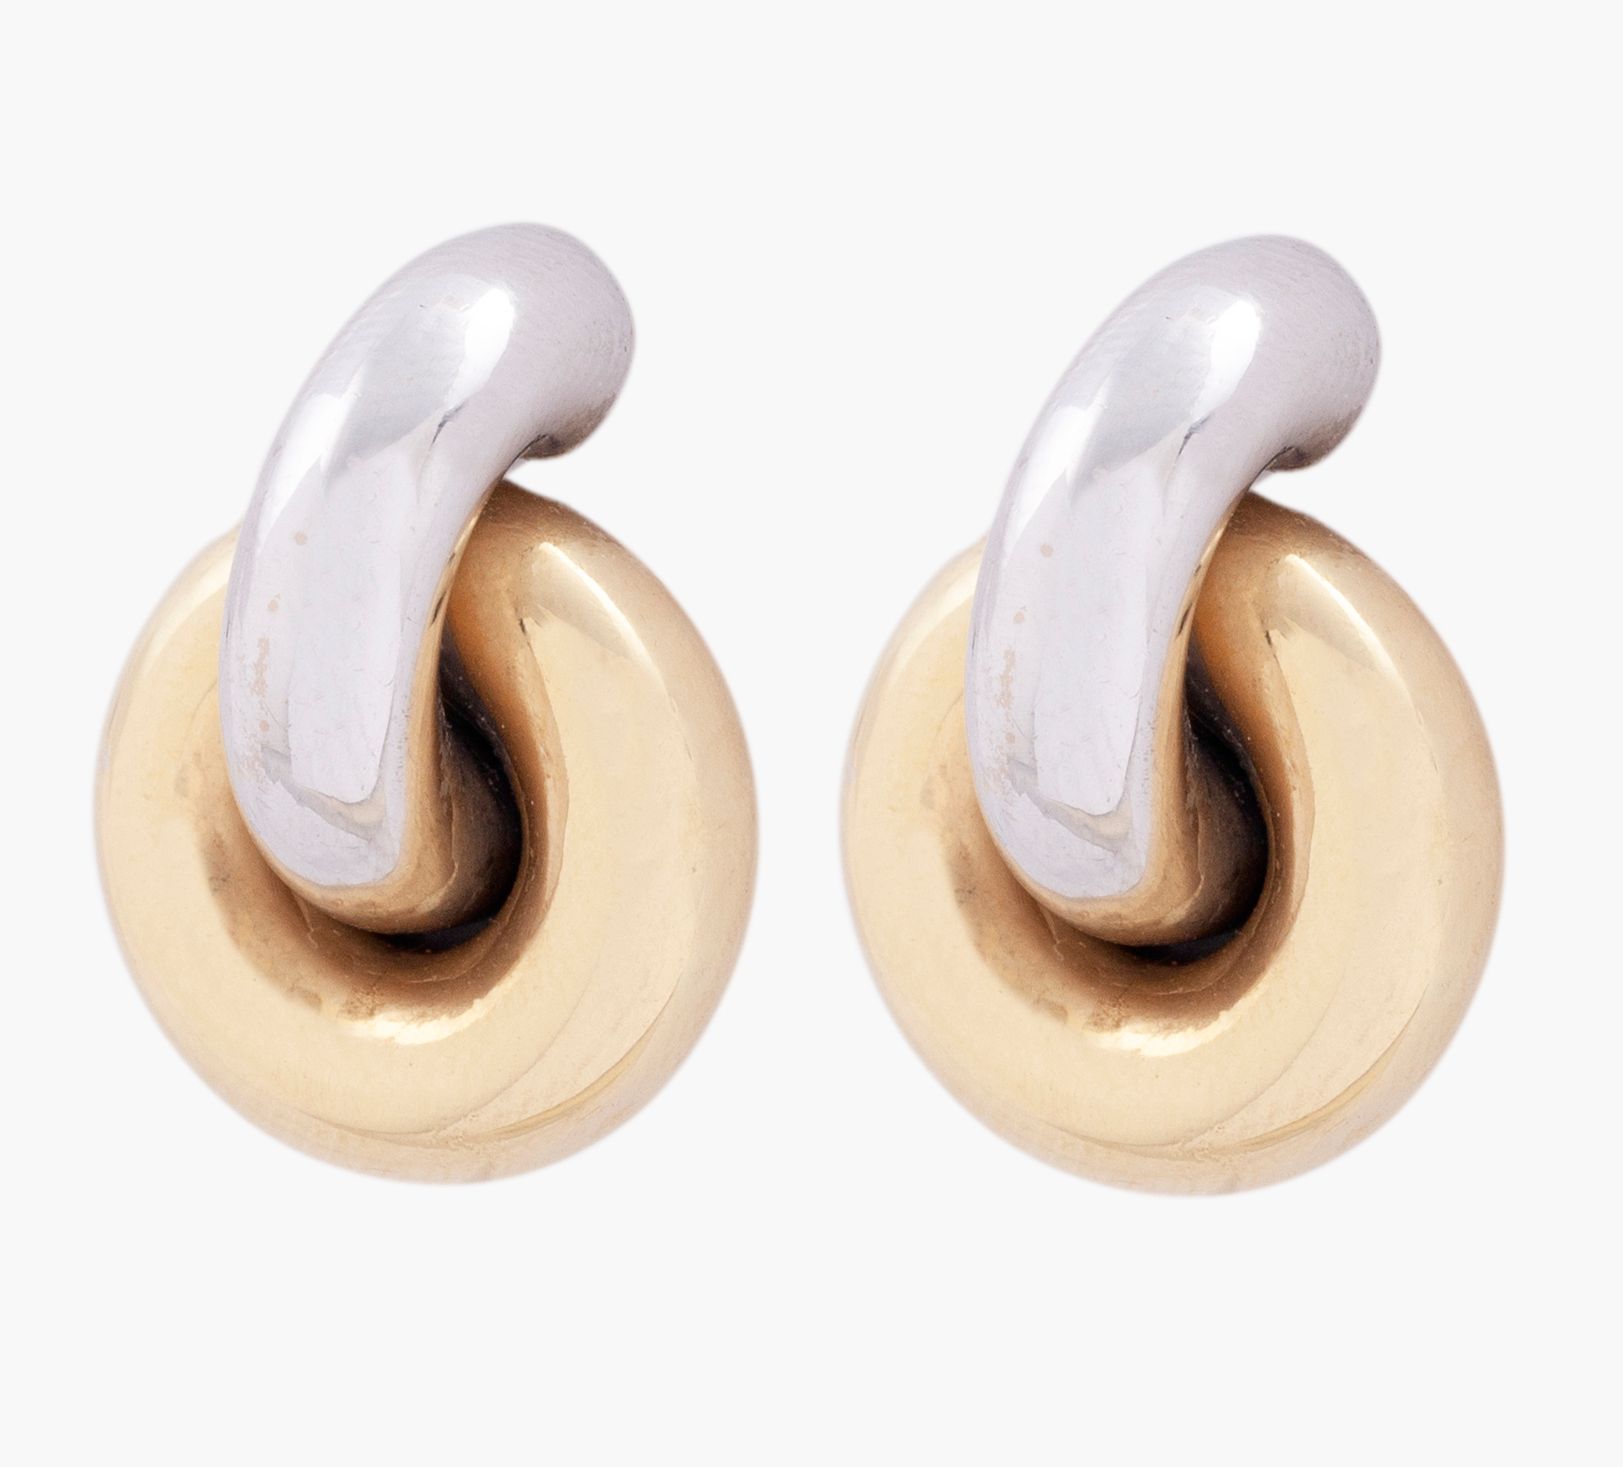 Null 18K 双色金耳环
一对 18K 双色金环形耳环。
搭扣：欧米茄
长度：2 厘米
重量：8 克